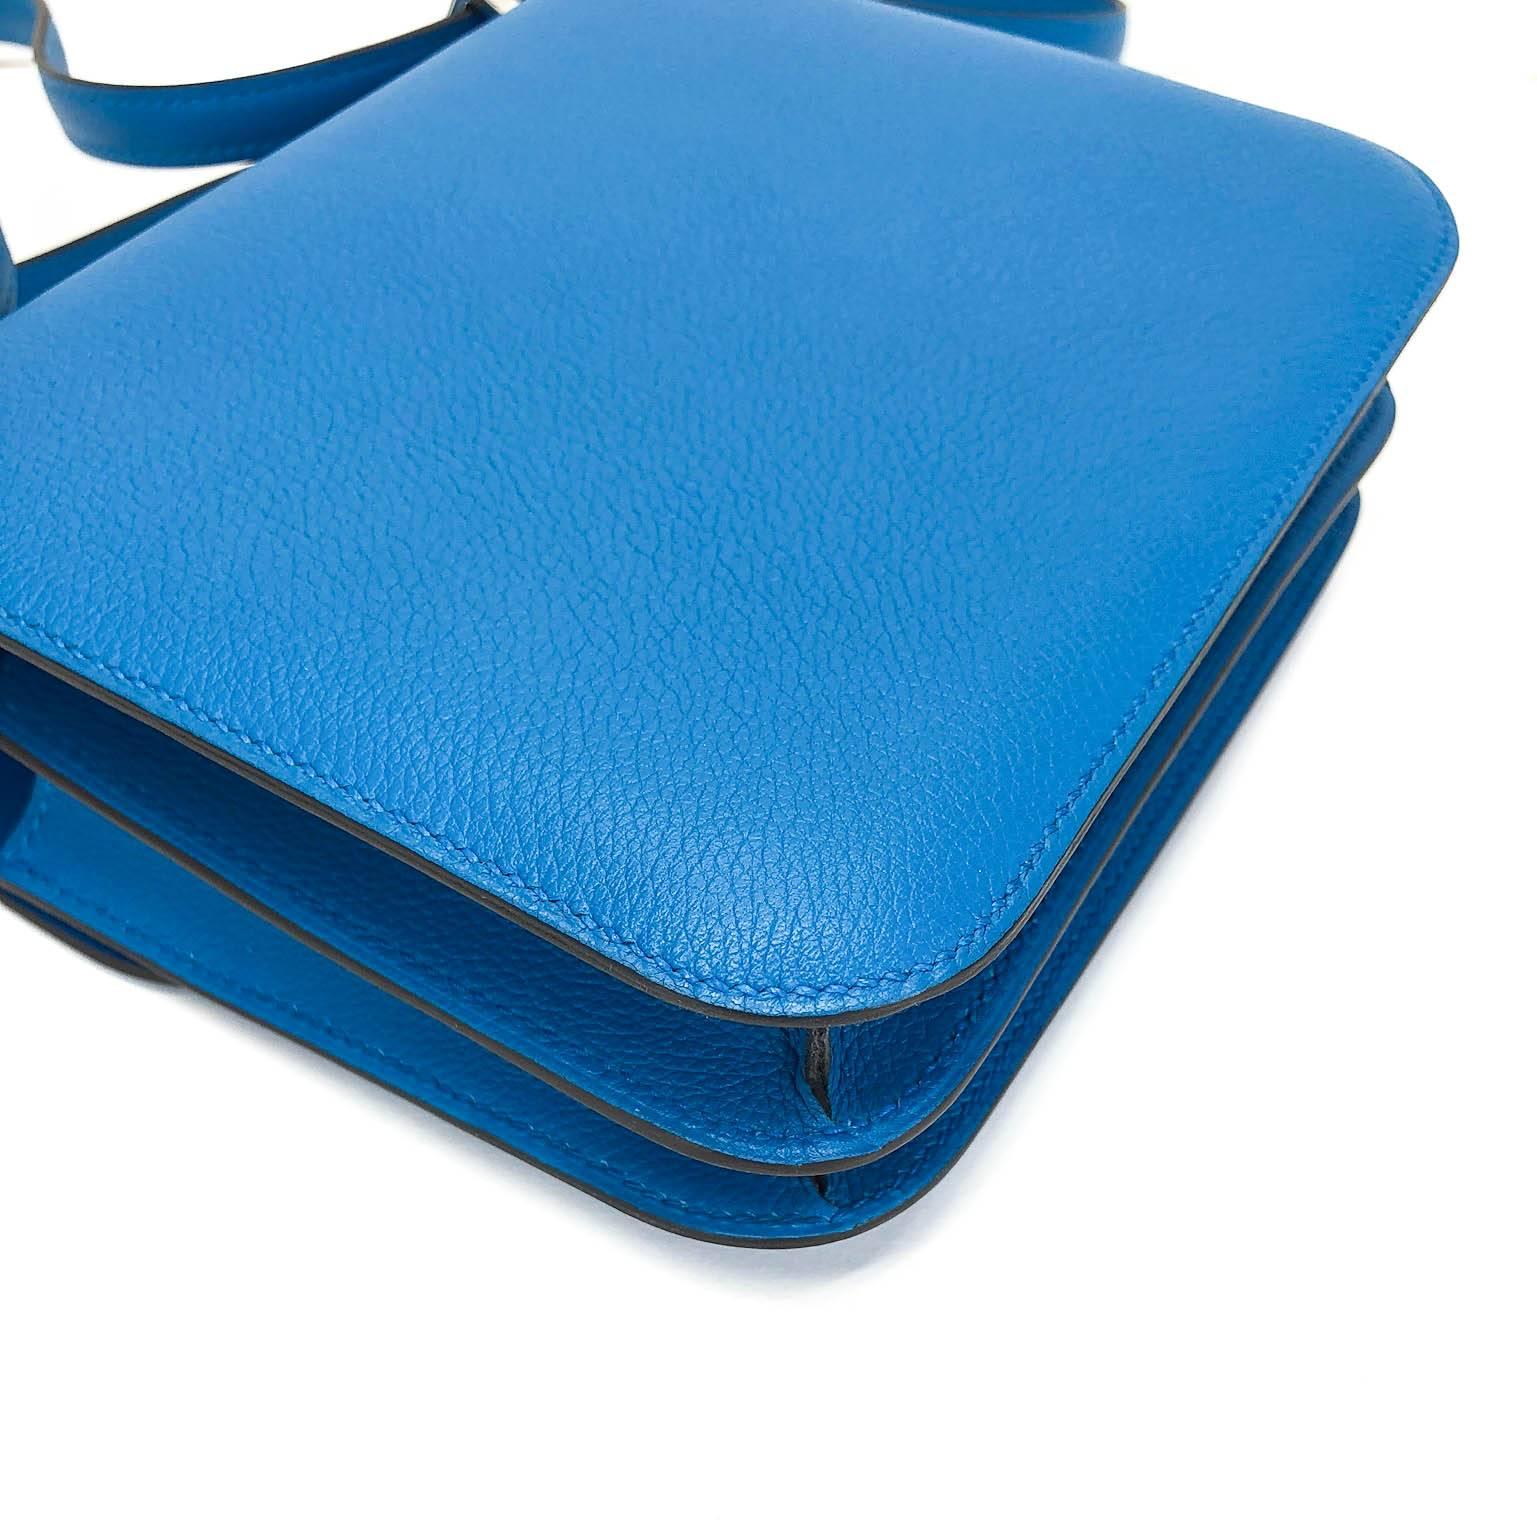 Hermes Cross body Handbag Constance 18 in Bleu Zanzibar with Palladium Hardware In New Condition For Sale In Toronto, Ontario